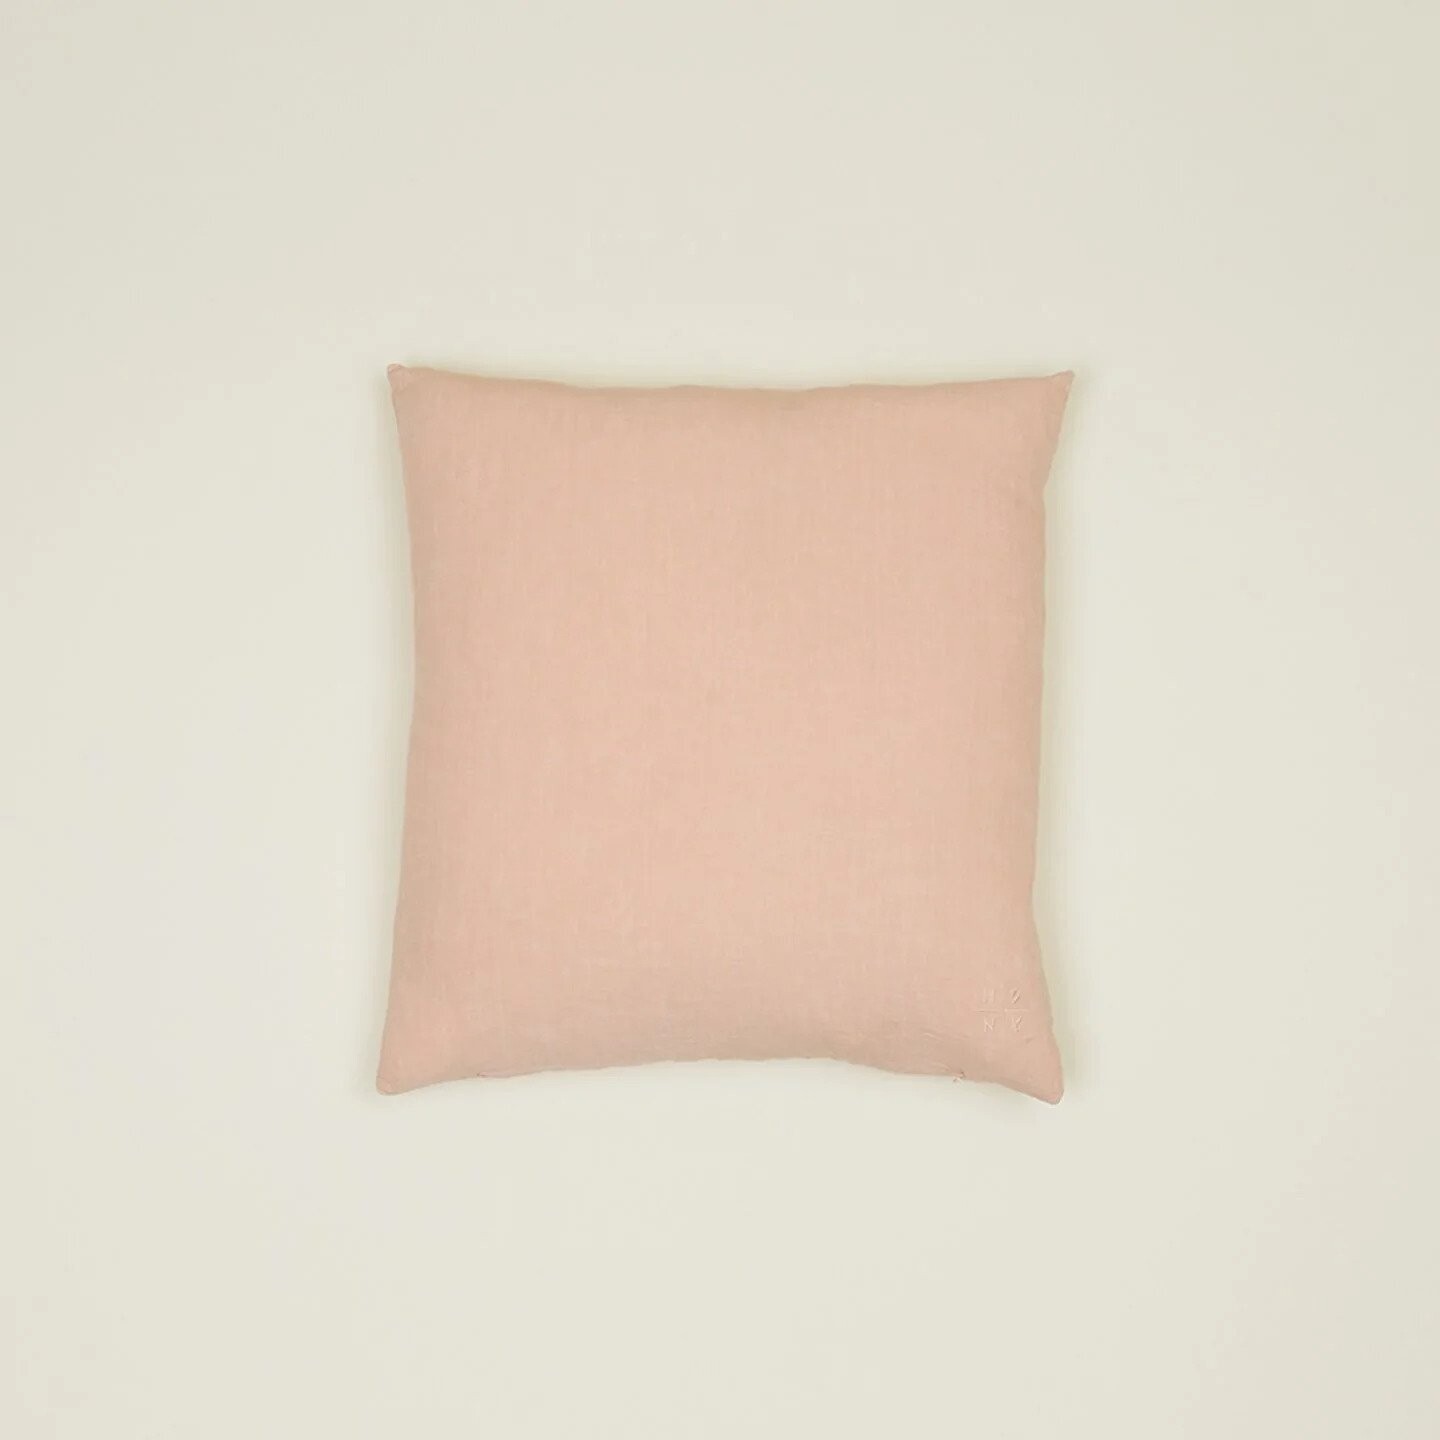 HNY Simple Linen 18" x 18" Throw Pillow - Blush